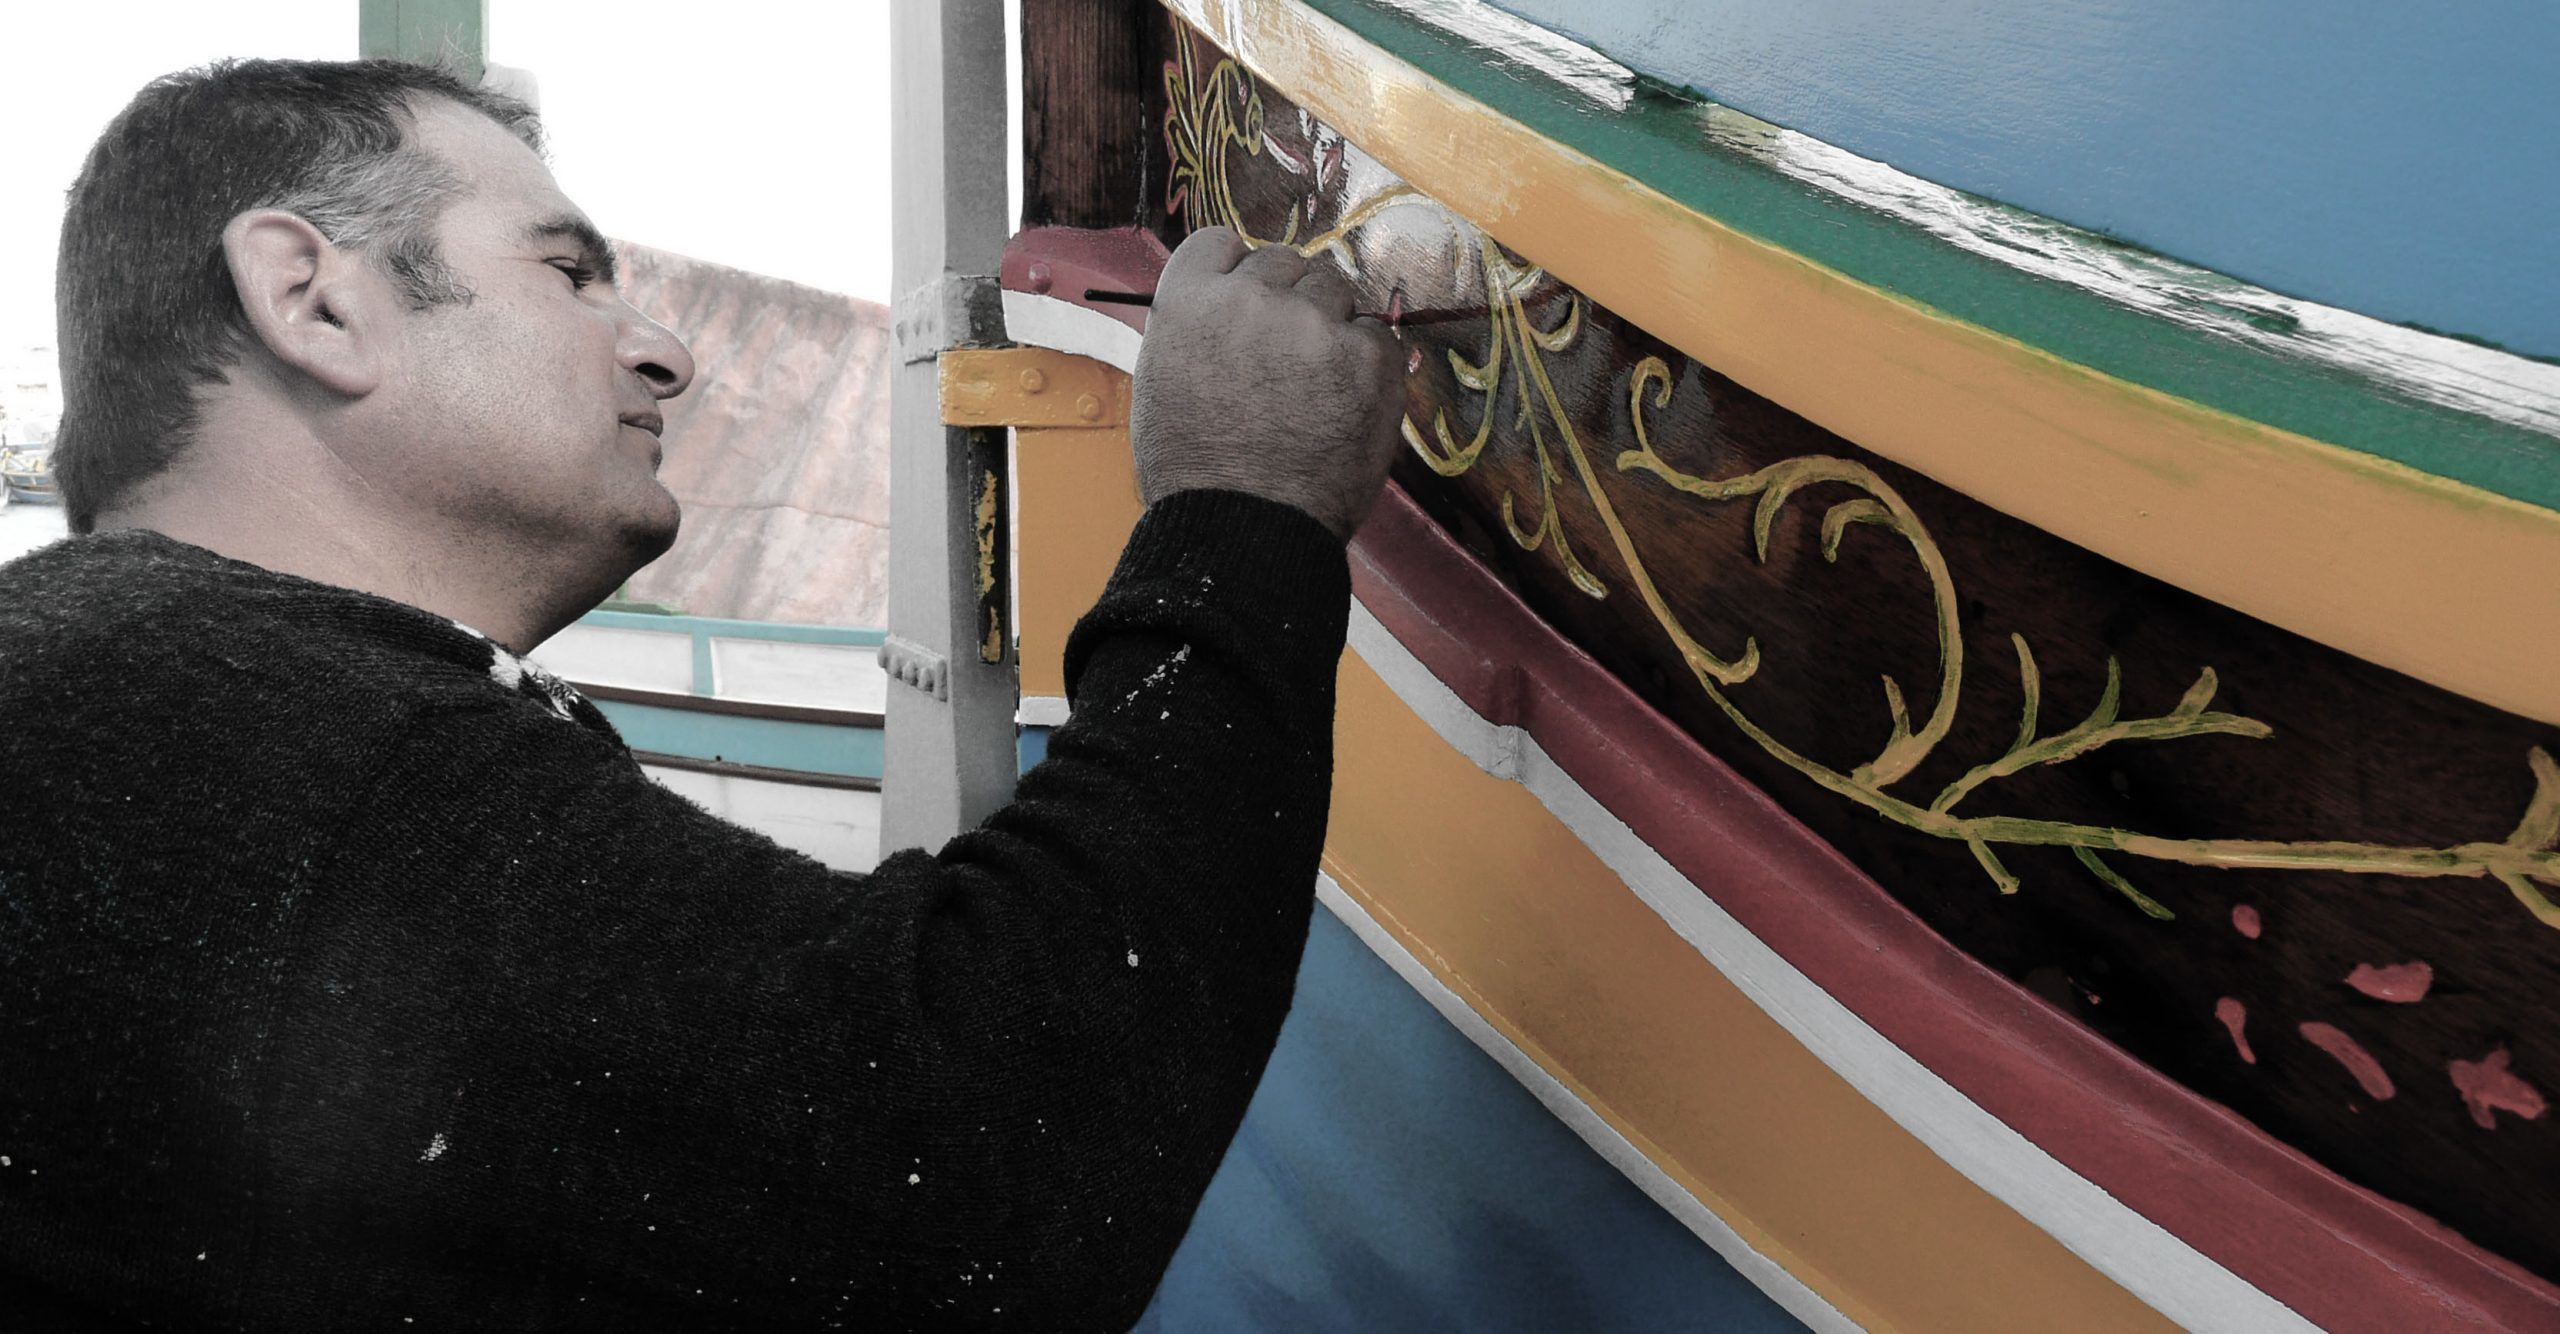 Man painting boat in Marsaxlokk Malta